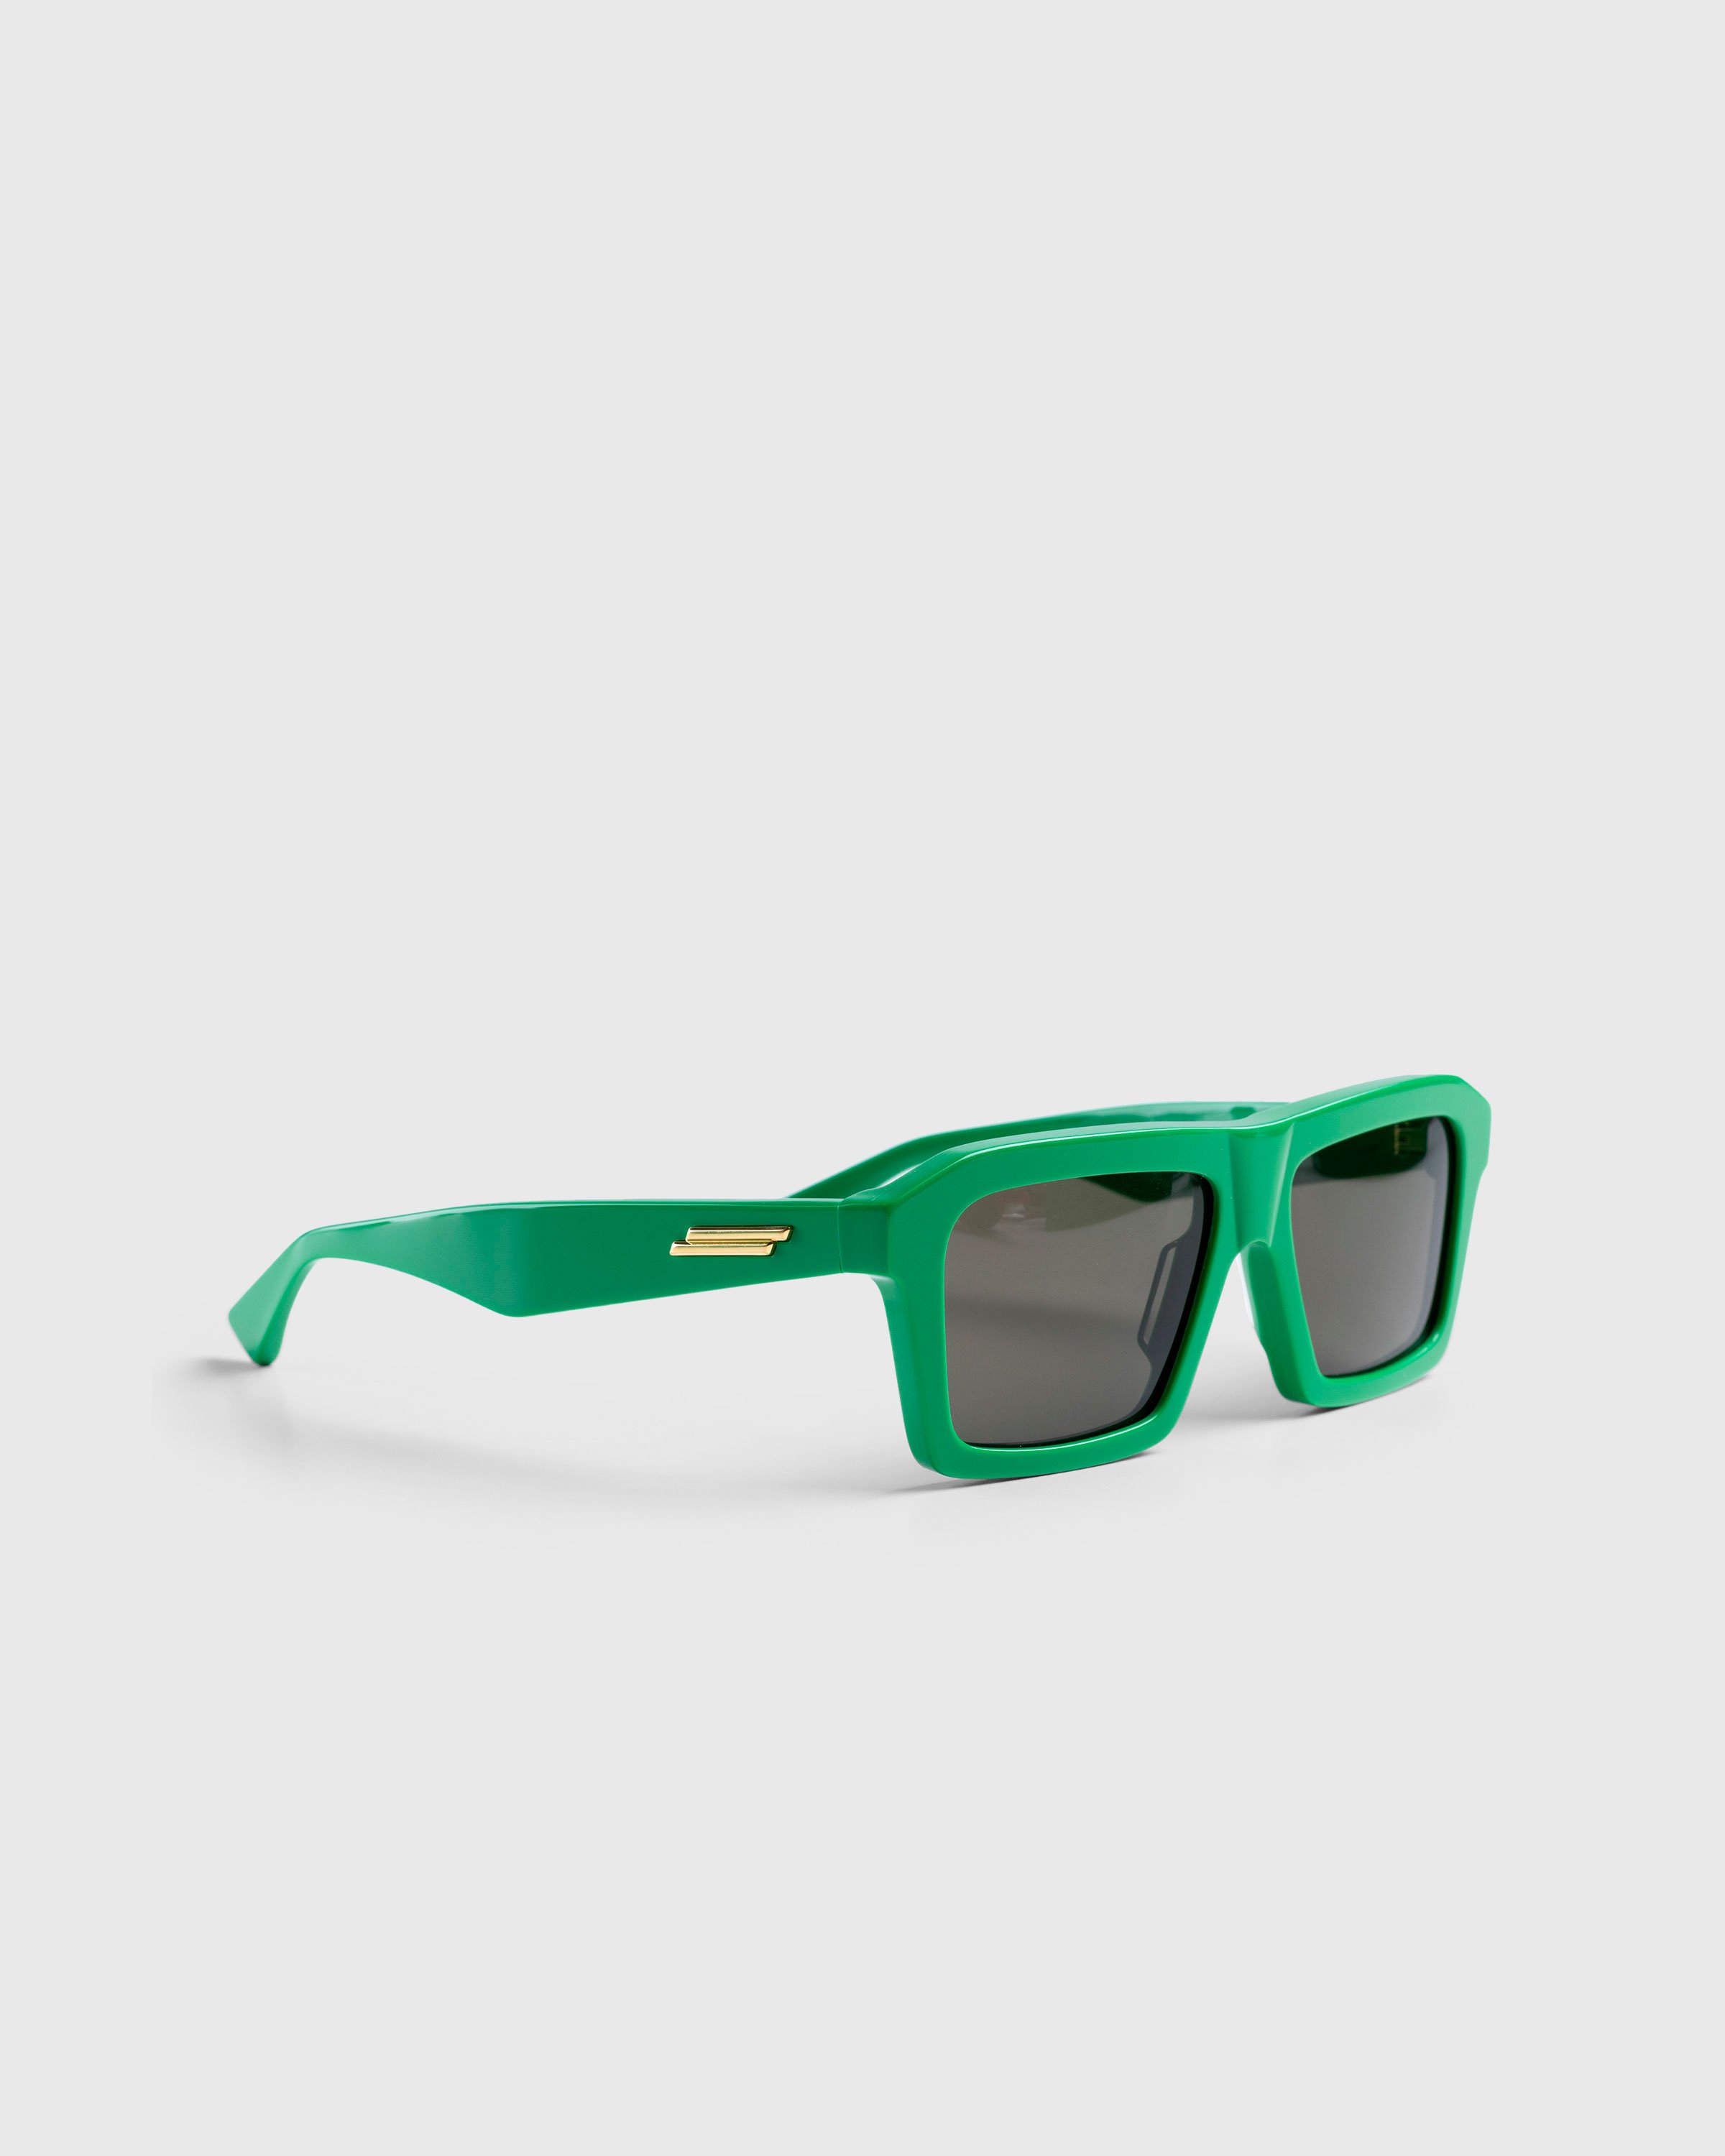 Bottega Veneta - Classic Square Sunglasses Green/Green - Accessories - Green - Image 2